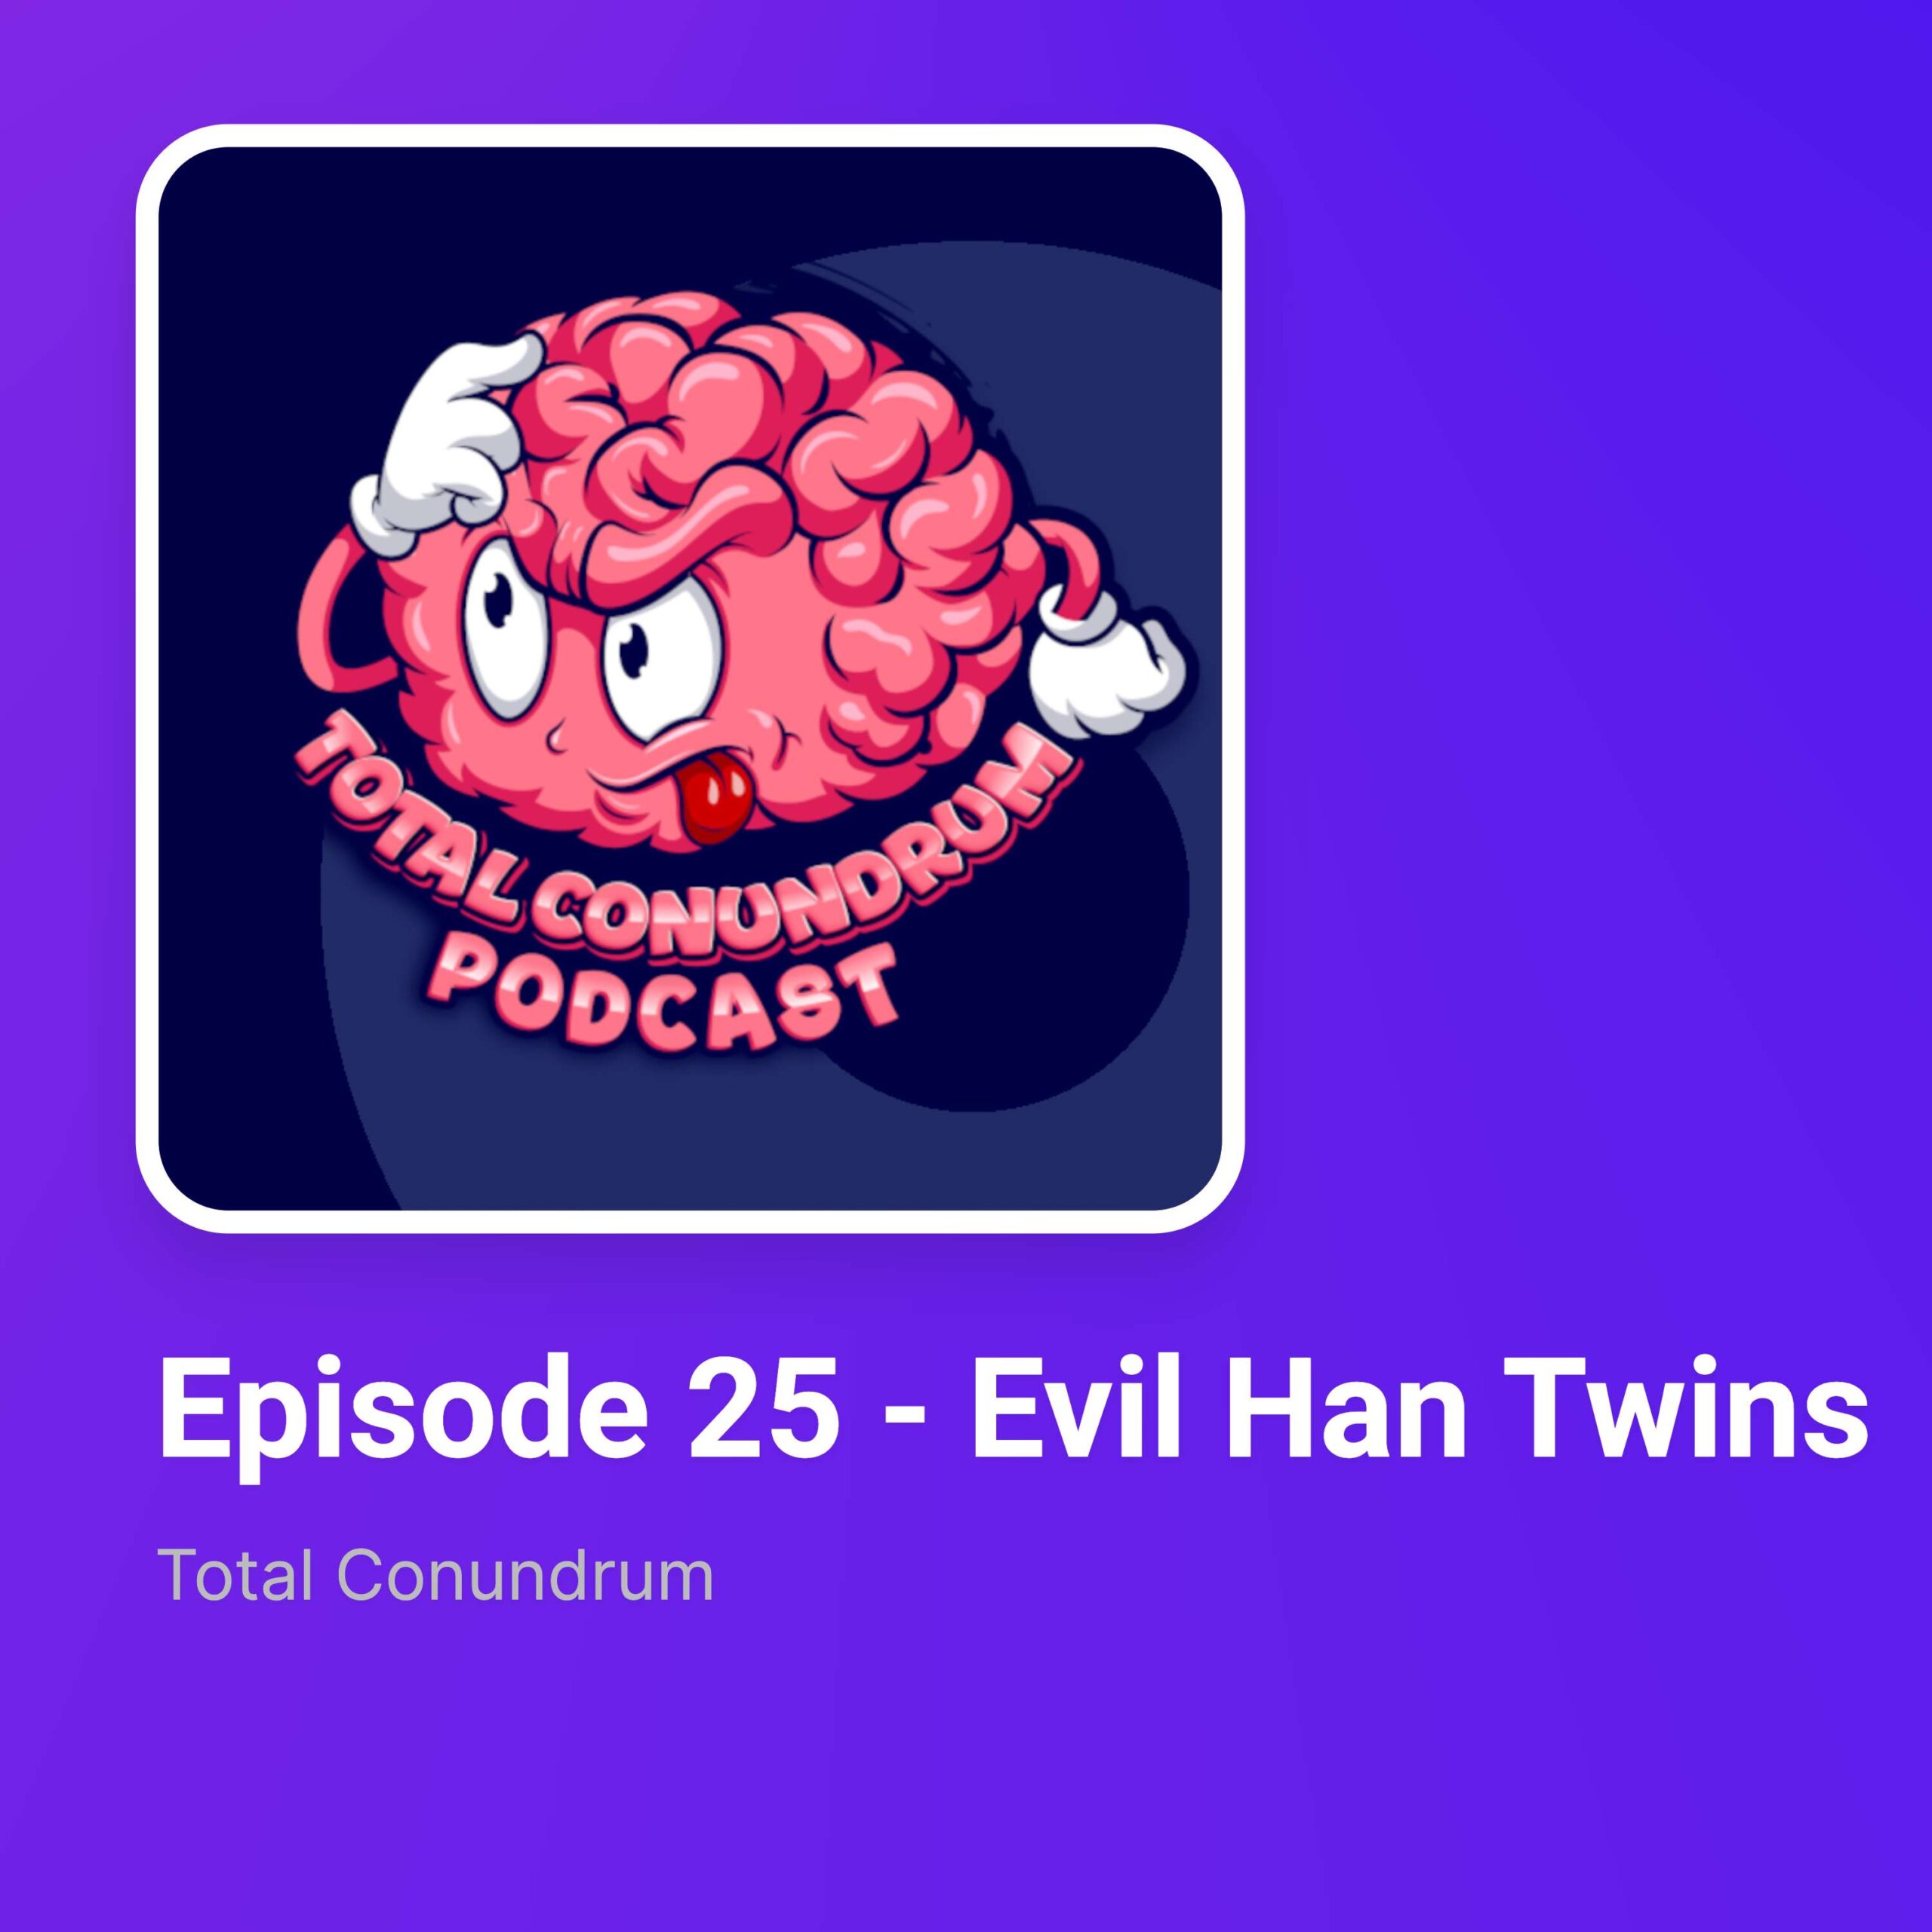 Episode 25 - Evil Han Twins